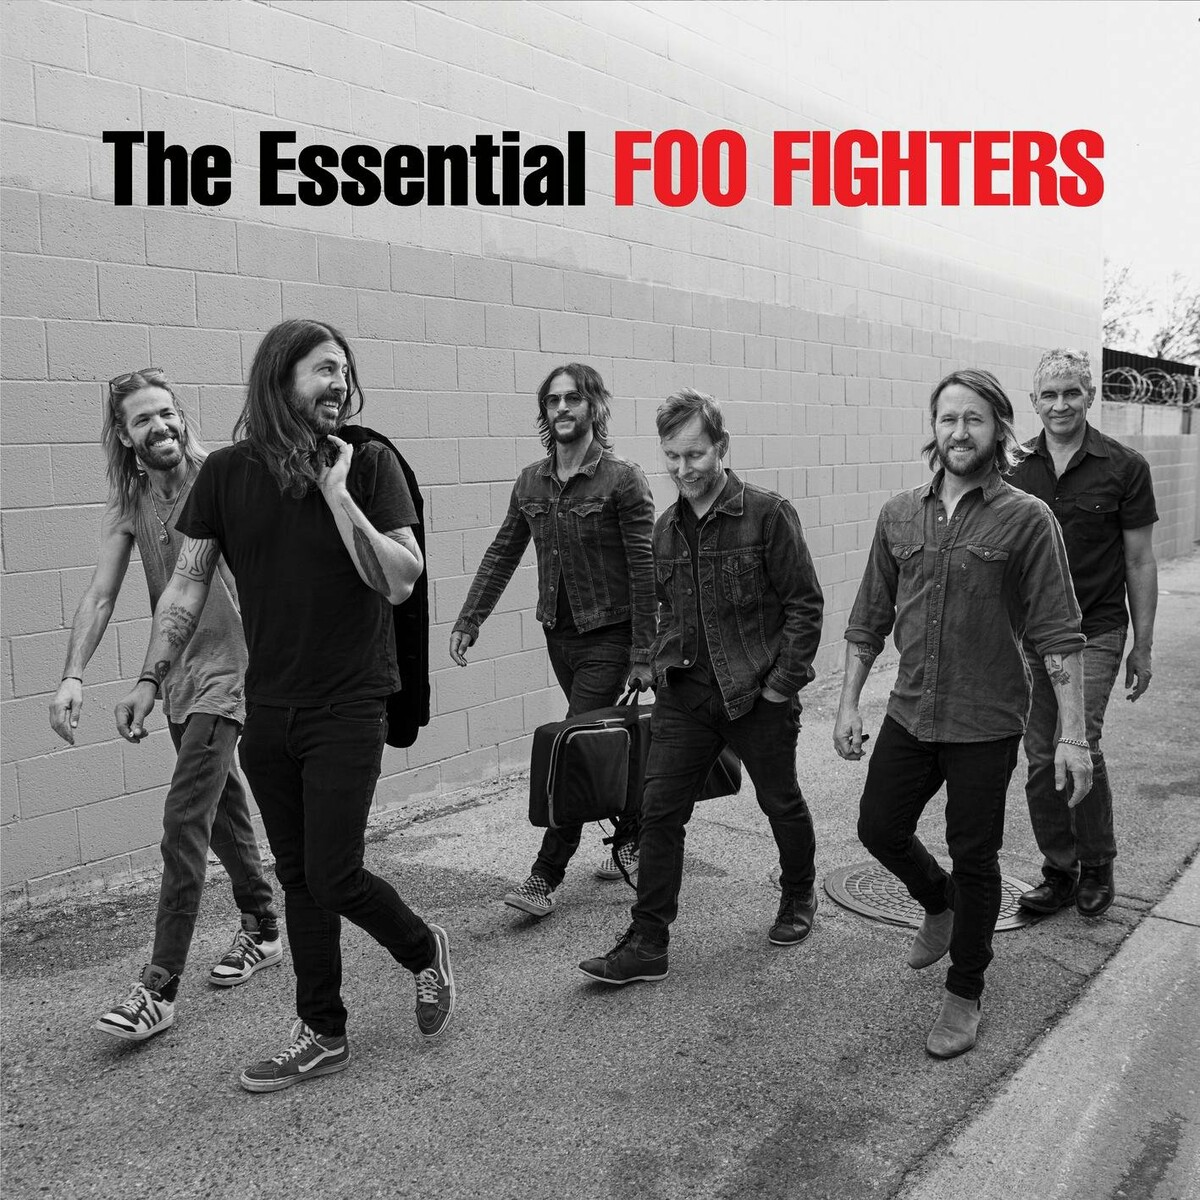 Foo Fighters - The Essential Foo Fighters 24b44.1